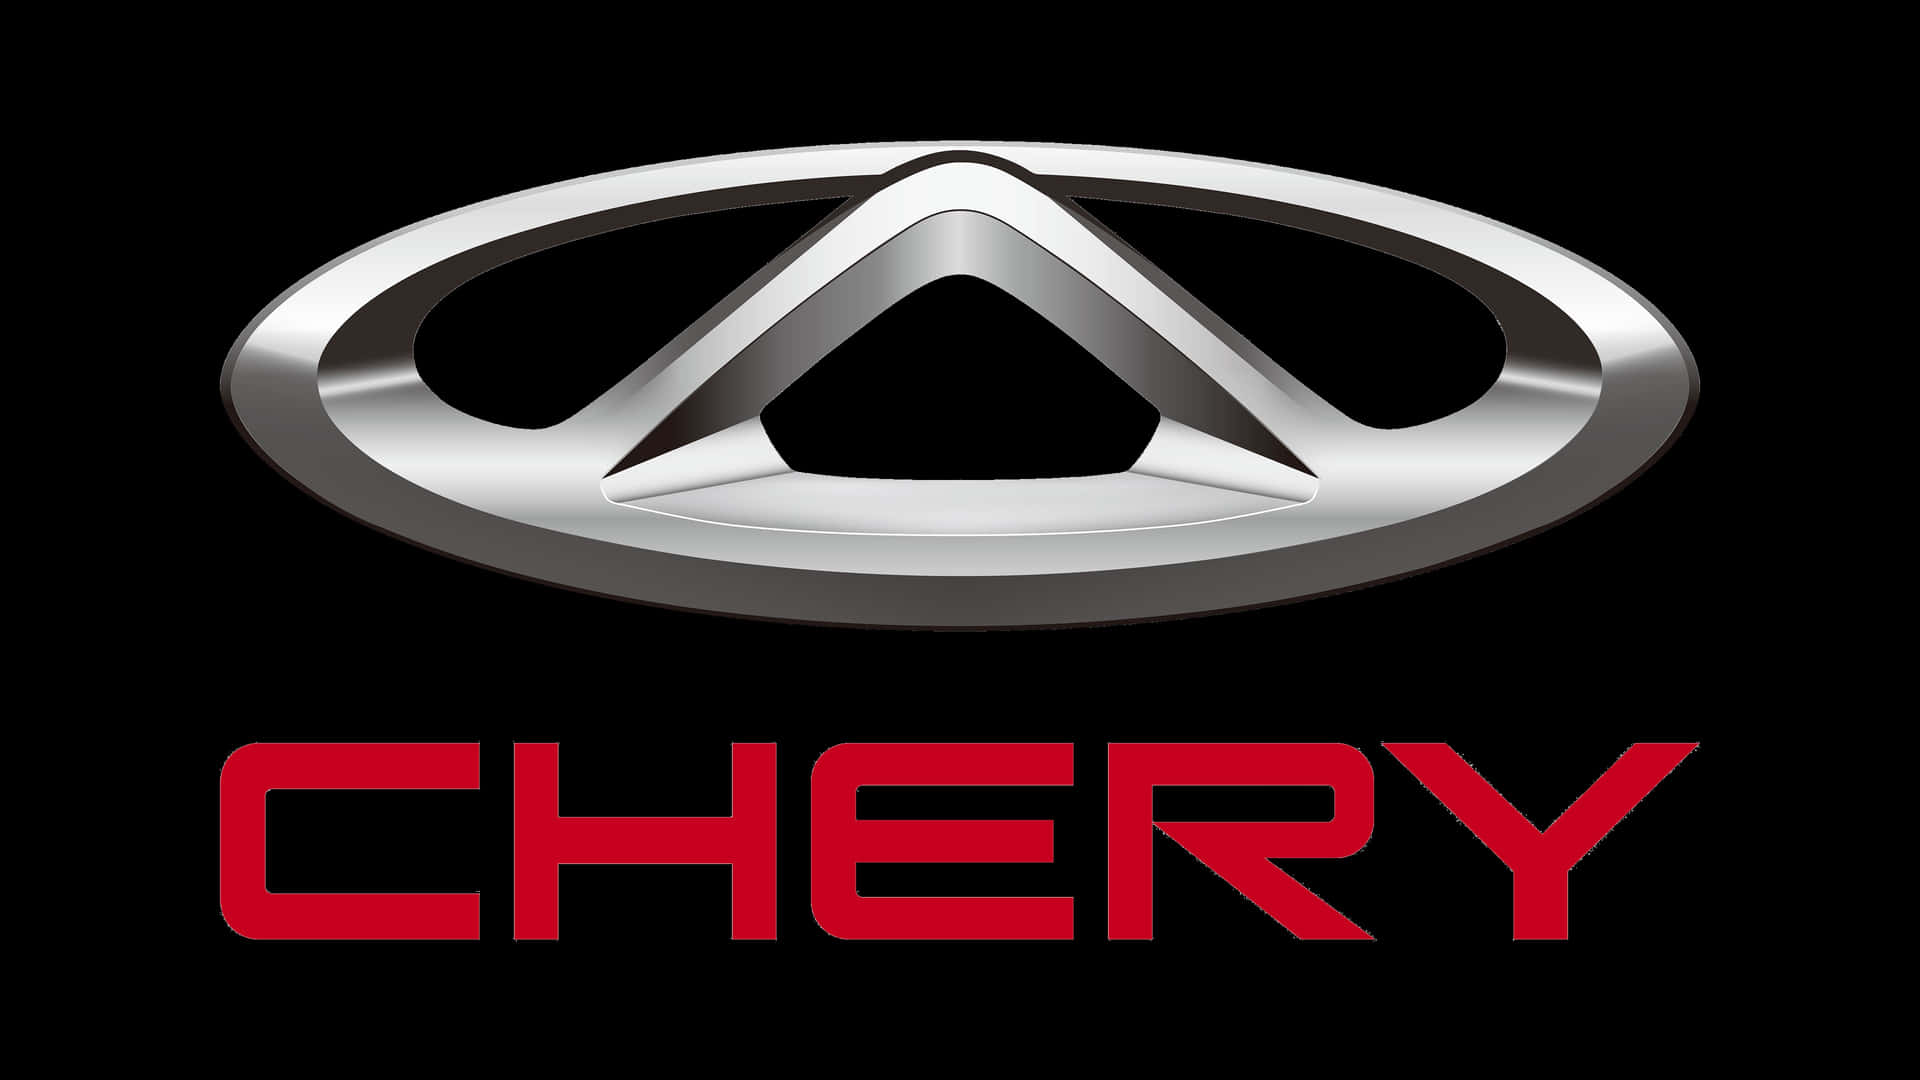 Sleek Chery Automobile Showcasing Beautiful Design and Performance Wallpaper